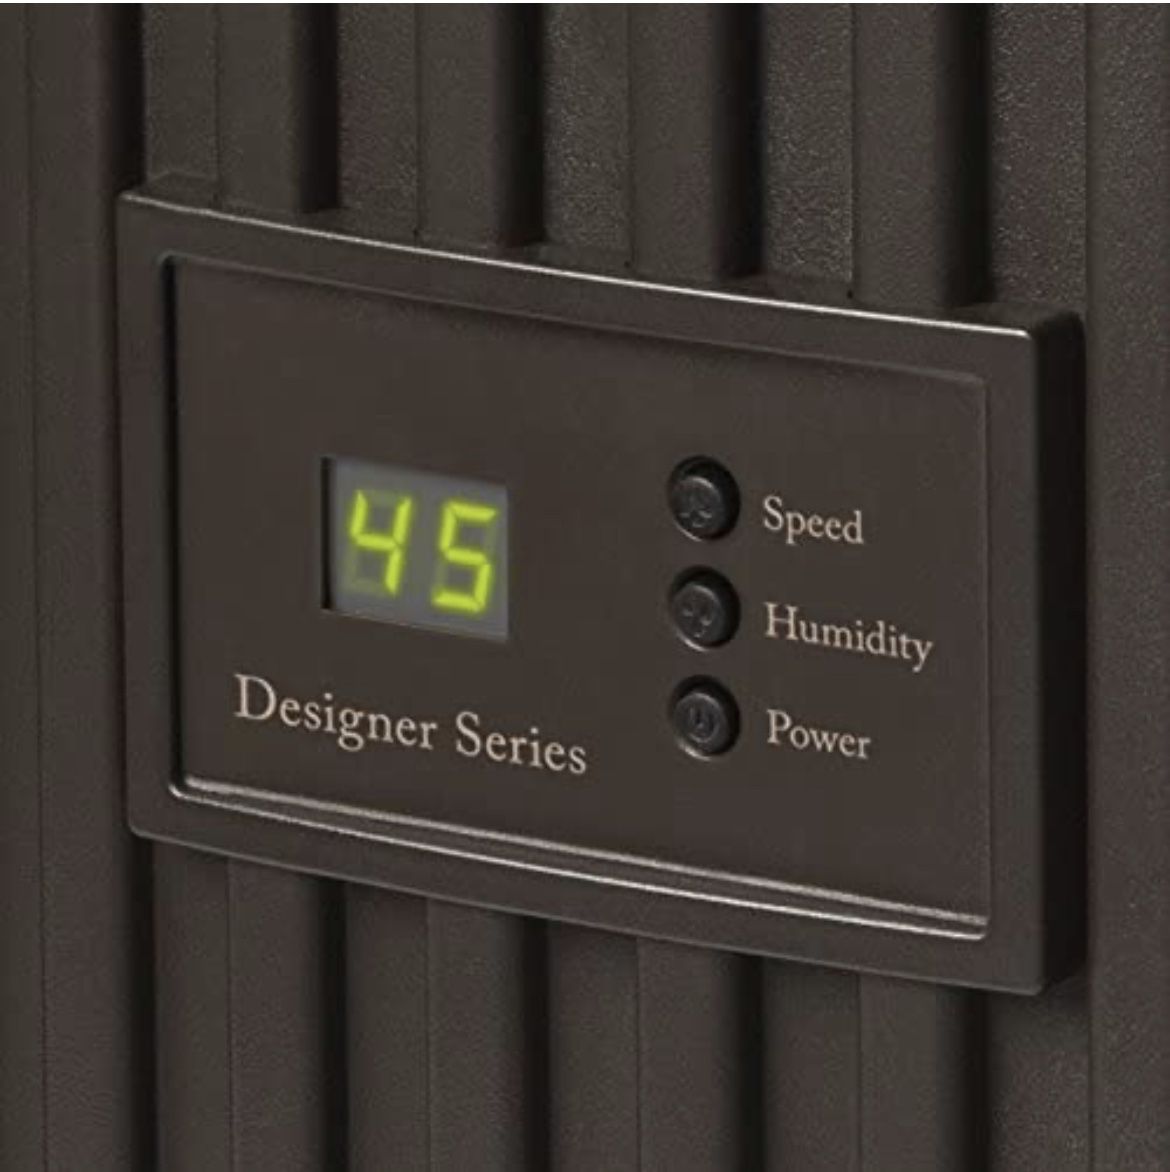 Aircare Digital Whole-House Pedestal style evaporative humidifier 